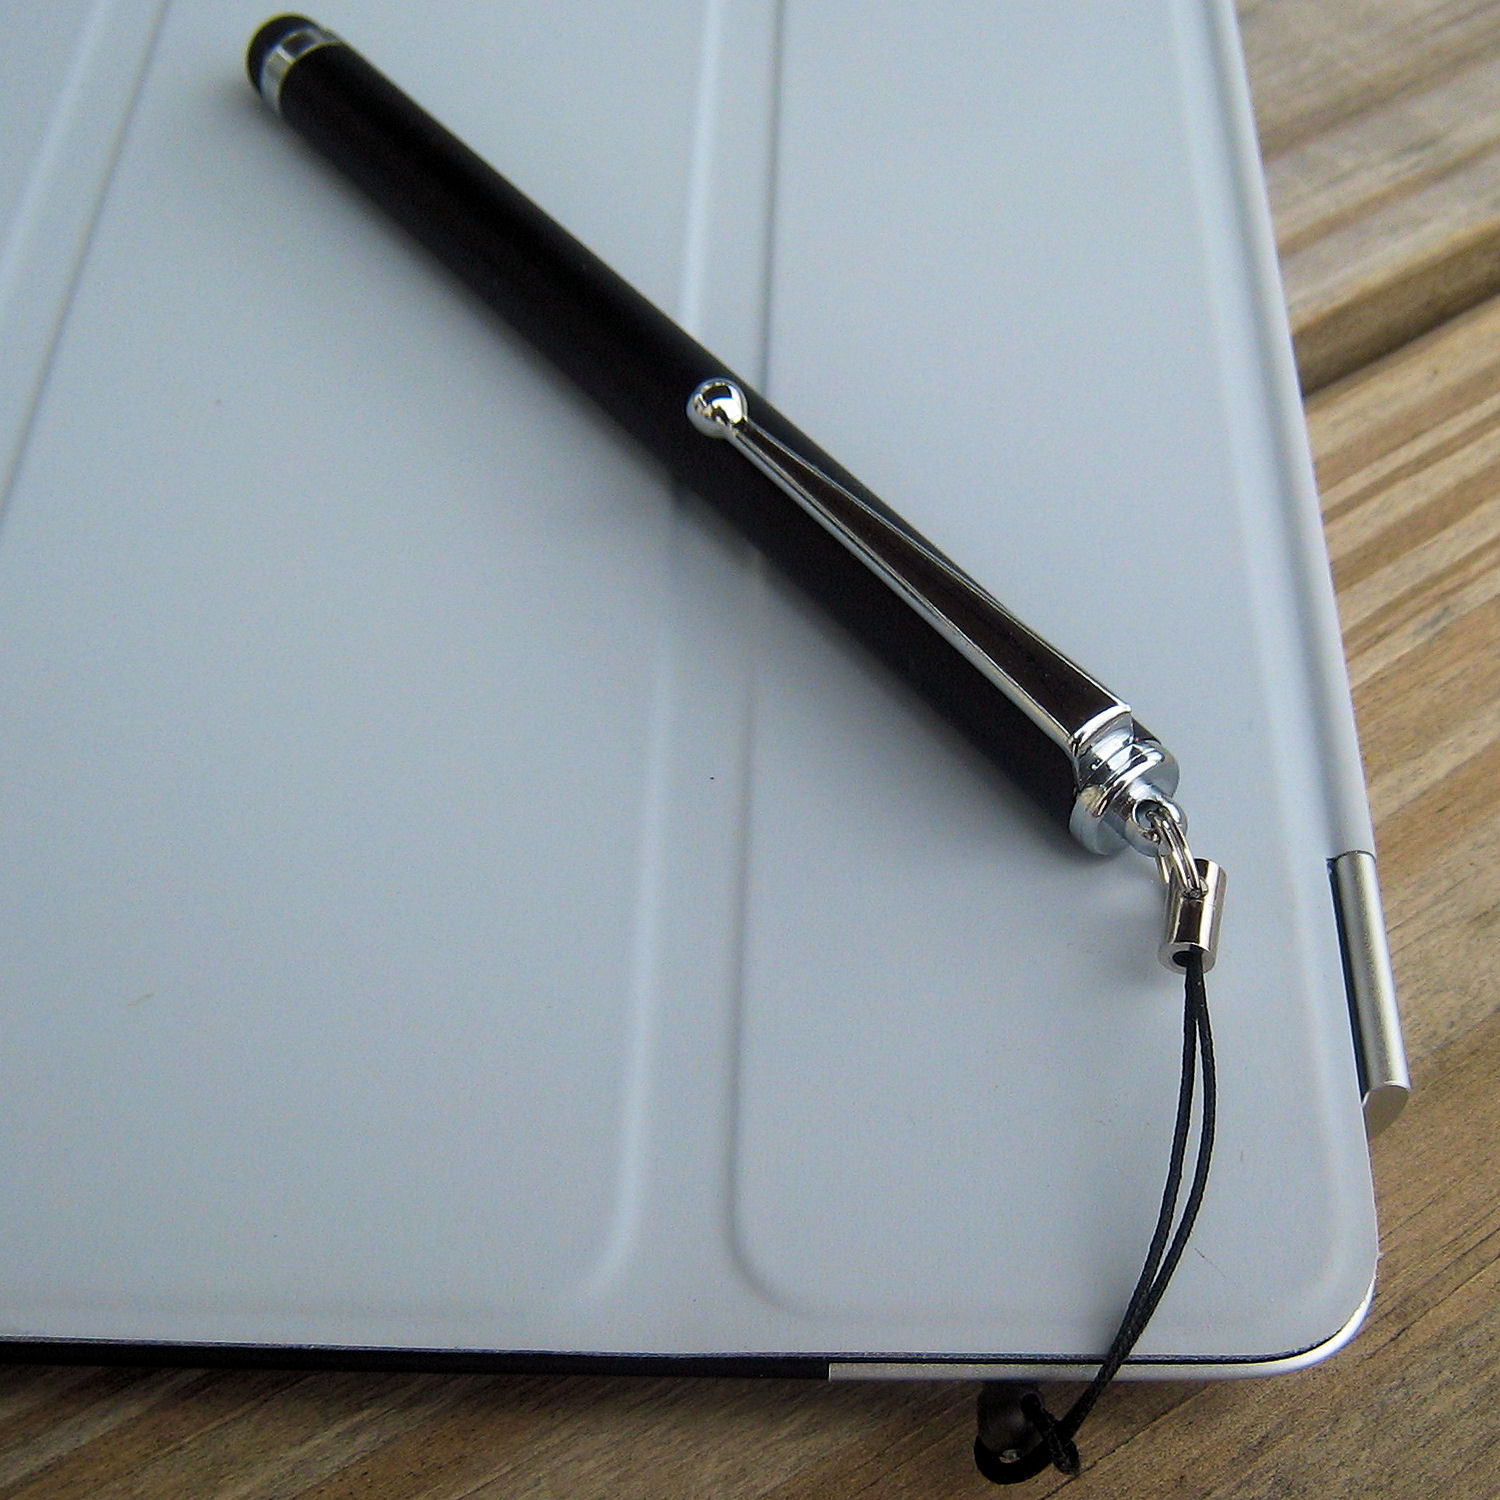 Gomadic Precision Tip Capacitive Stylus Pen designed for the Motorola Daytona (Black Color) - Lifetime Warranty